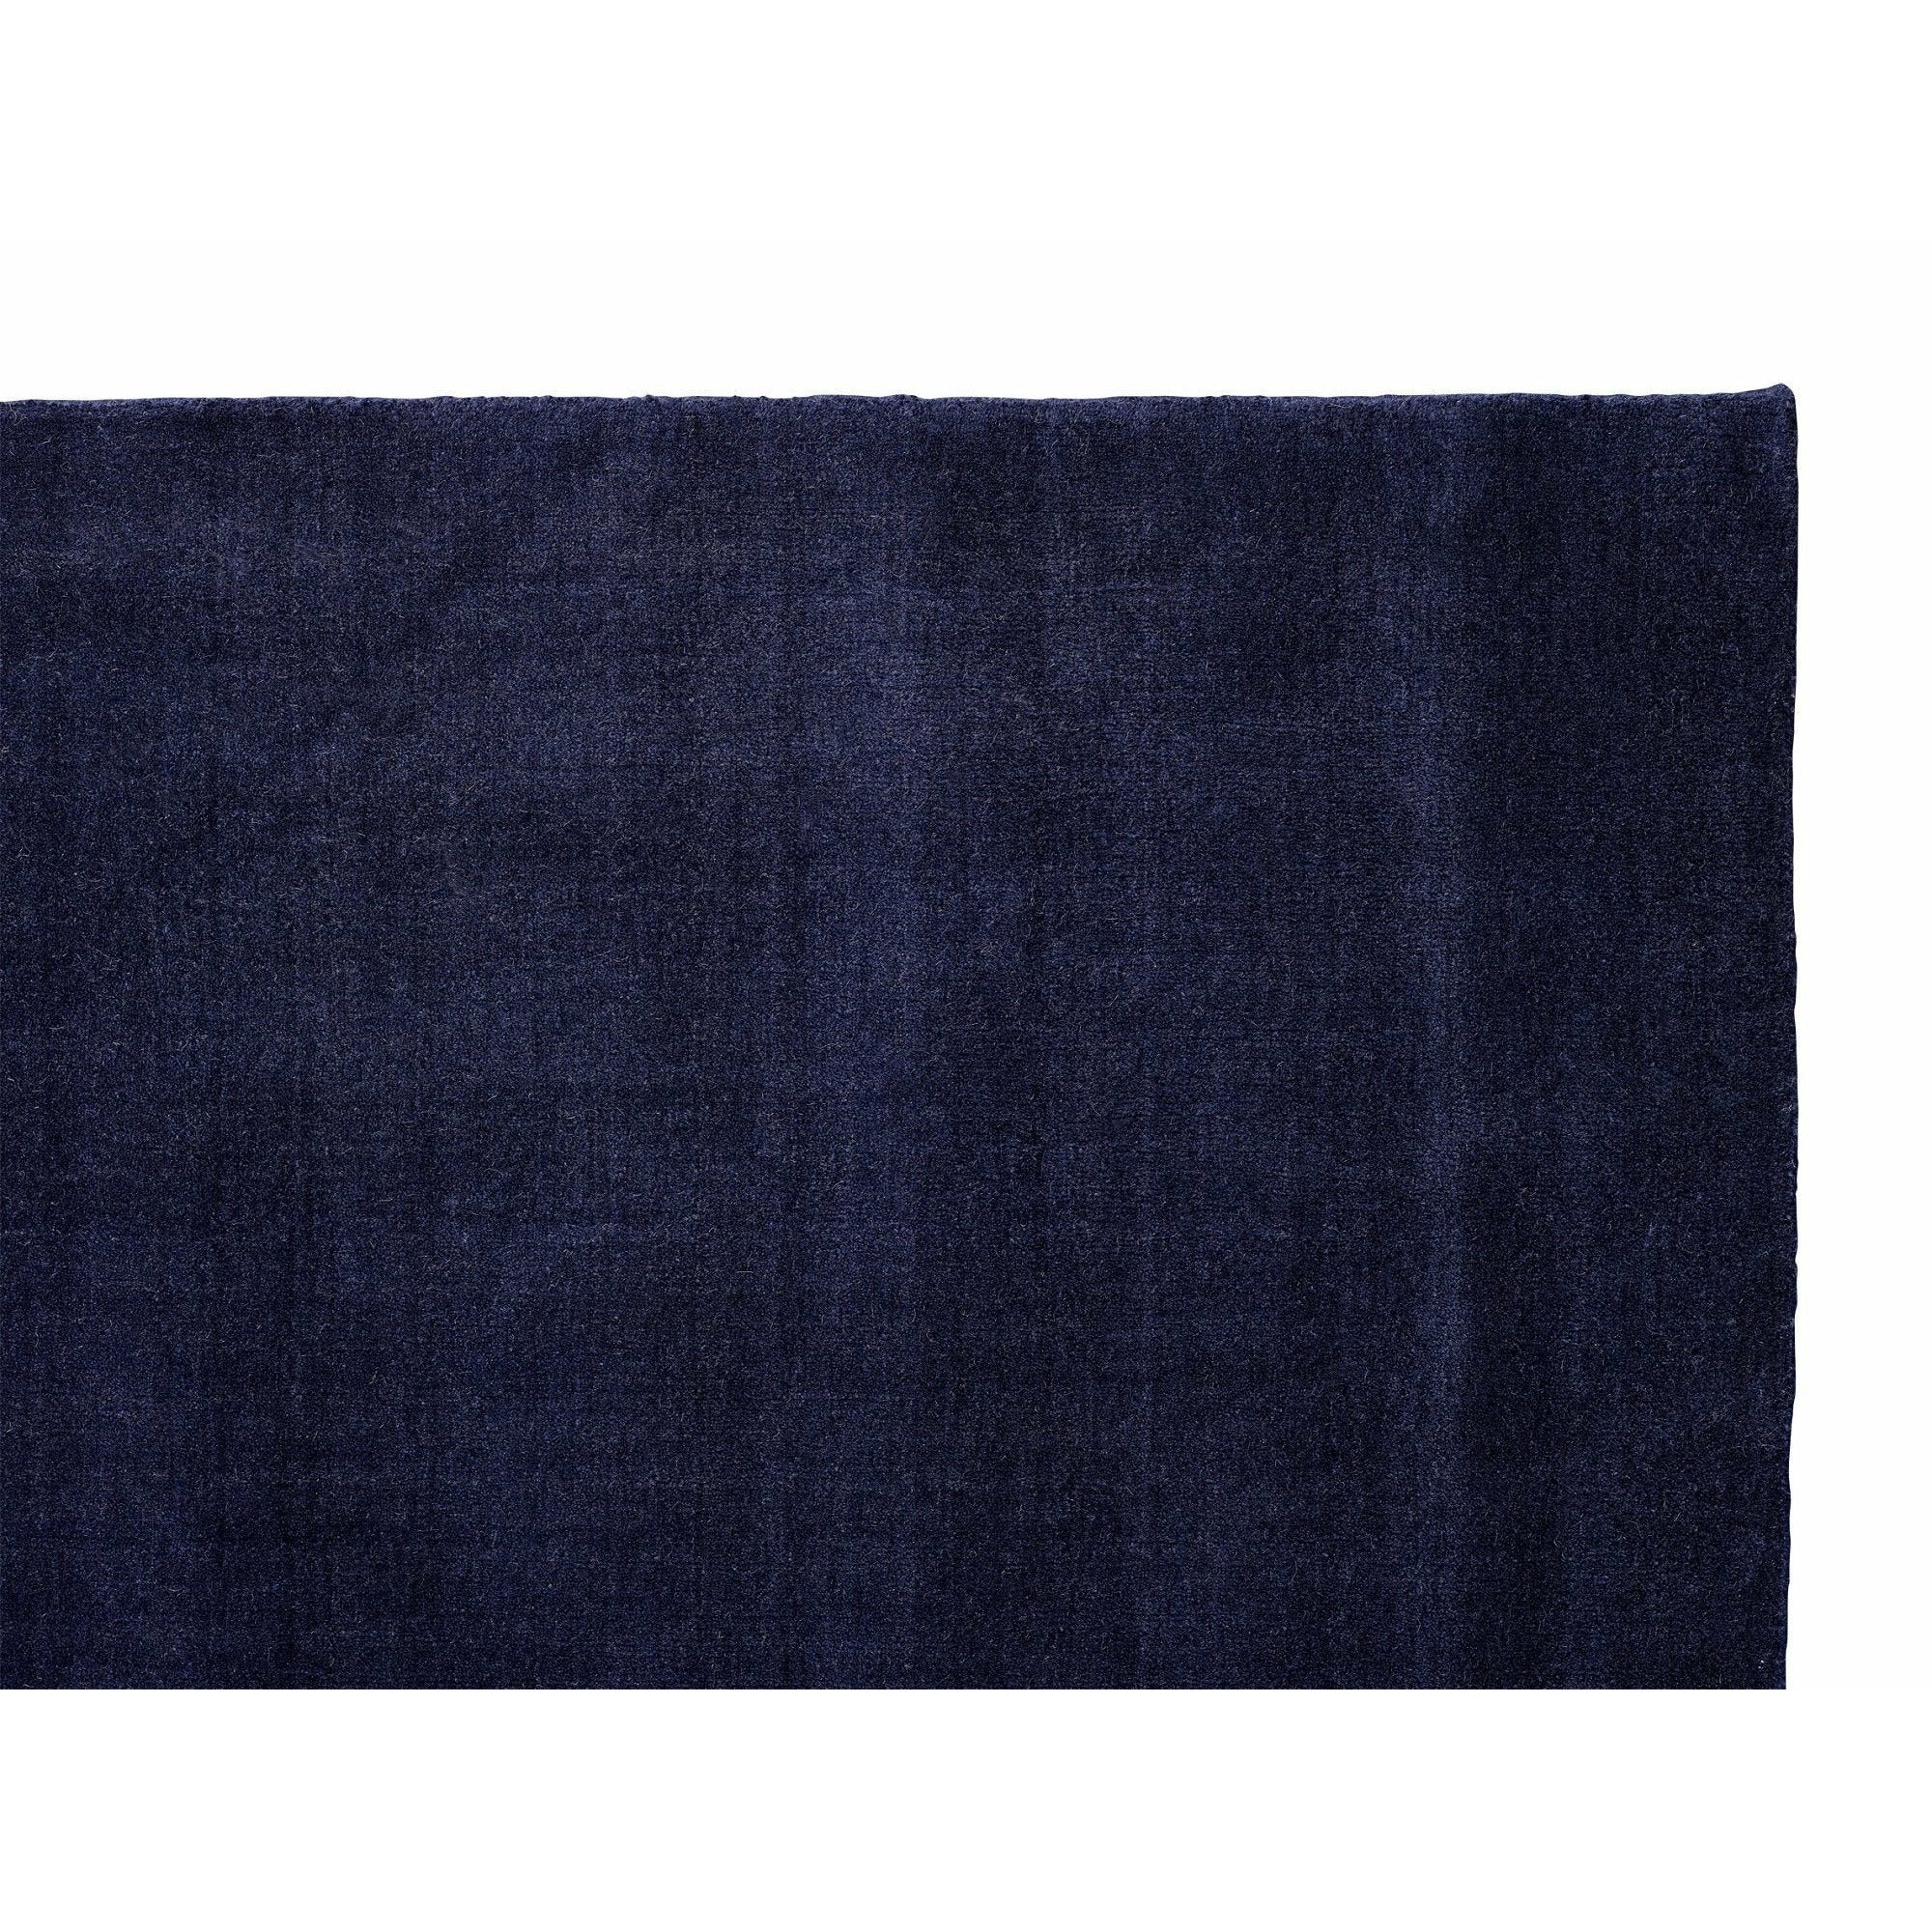 Massimo Earth Bamboo地毯充满活力的蓝色，170x240厘米